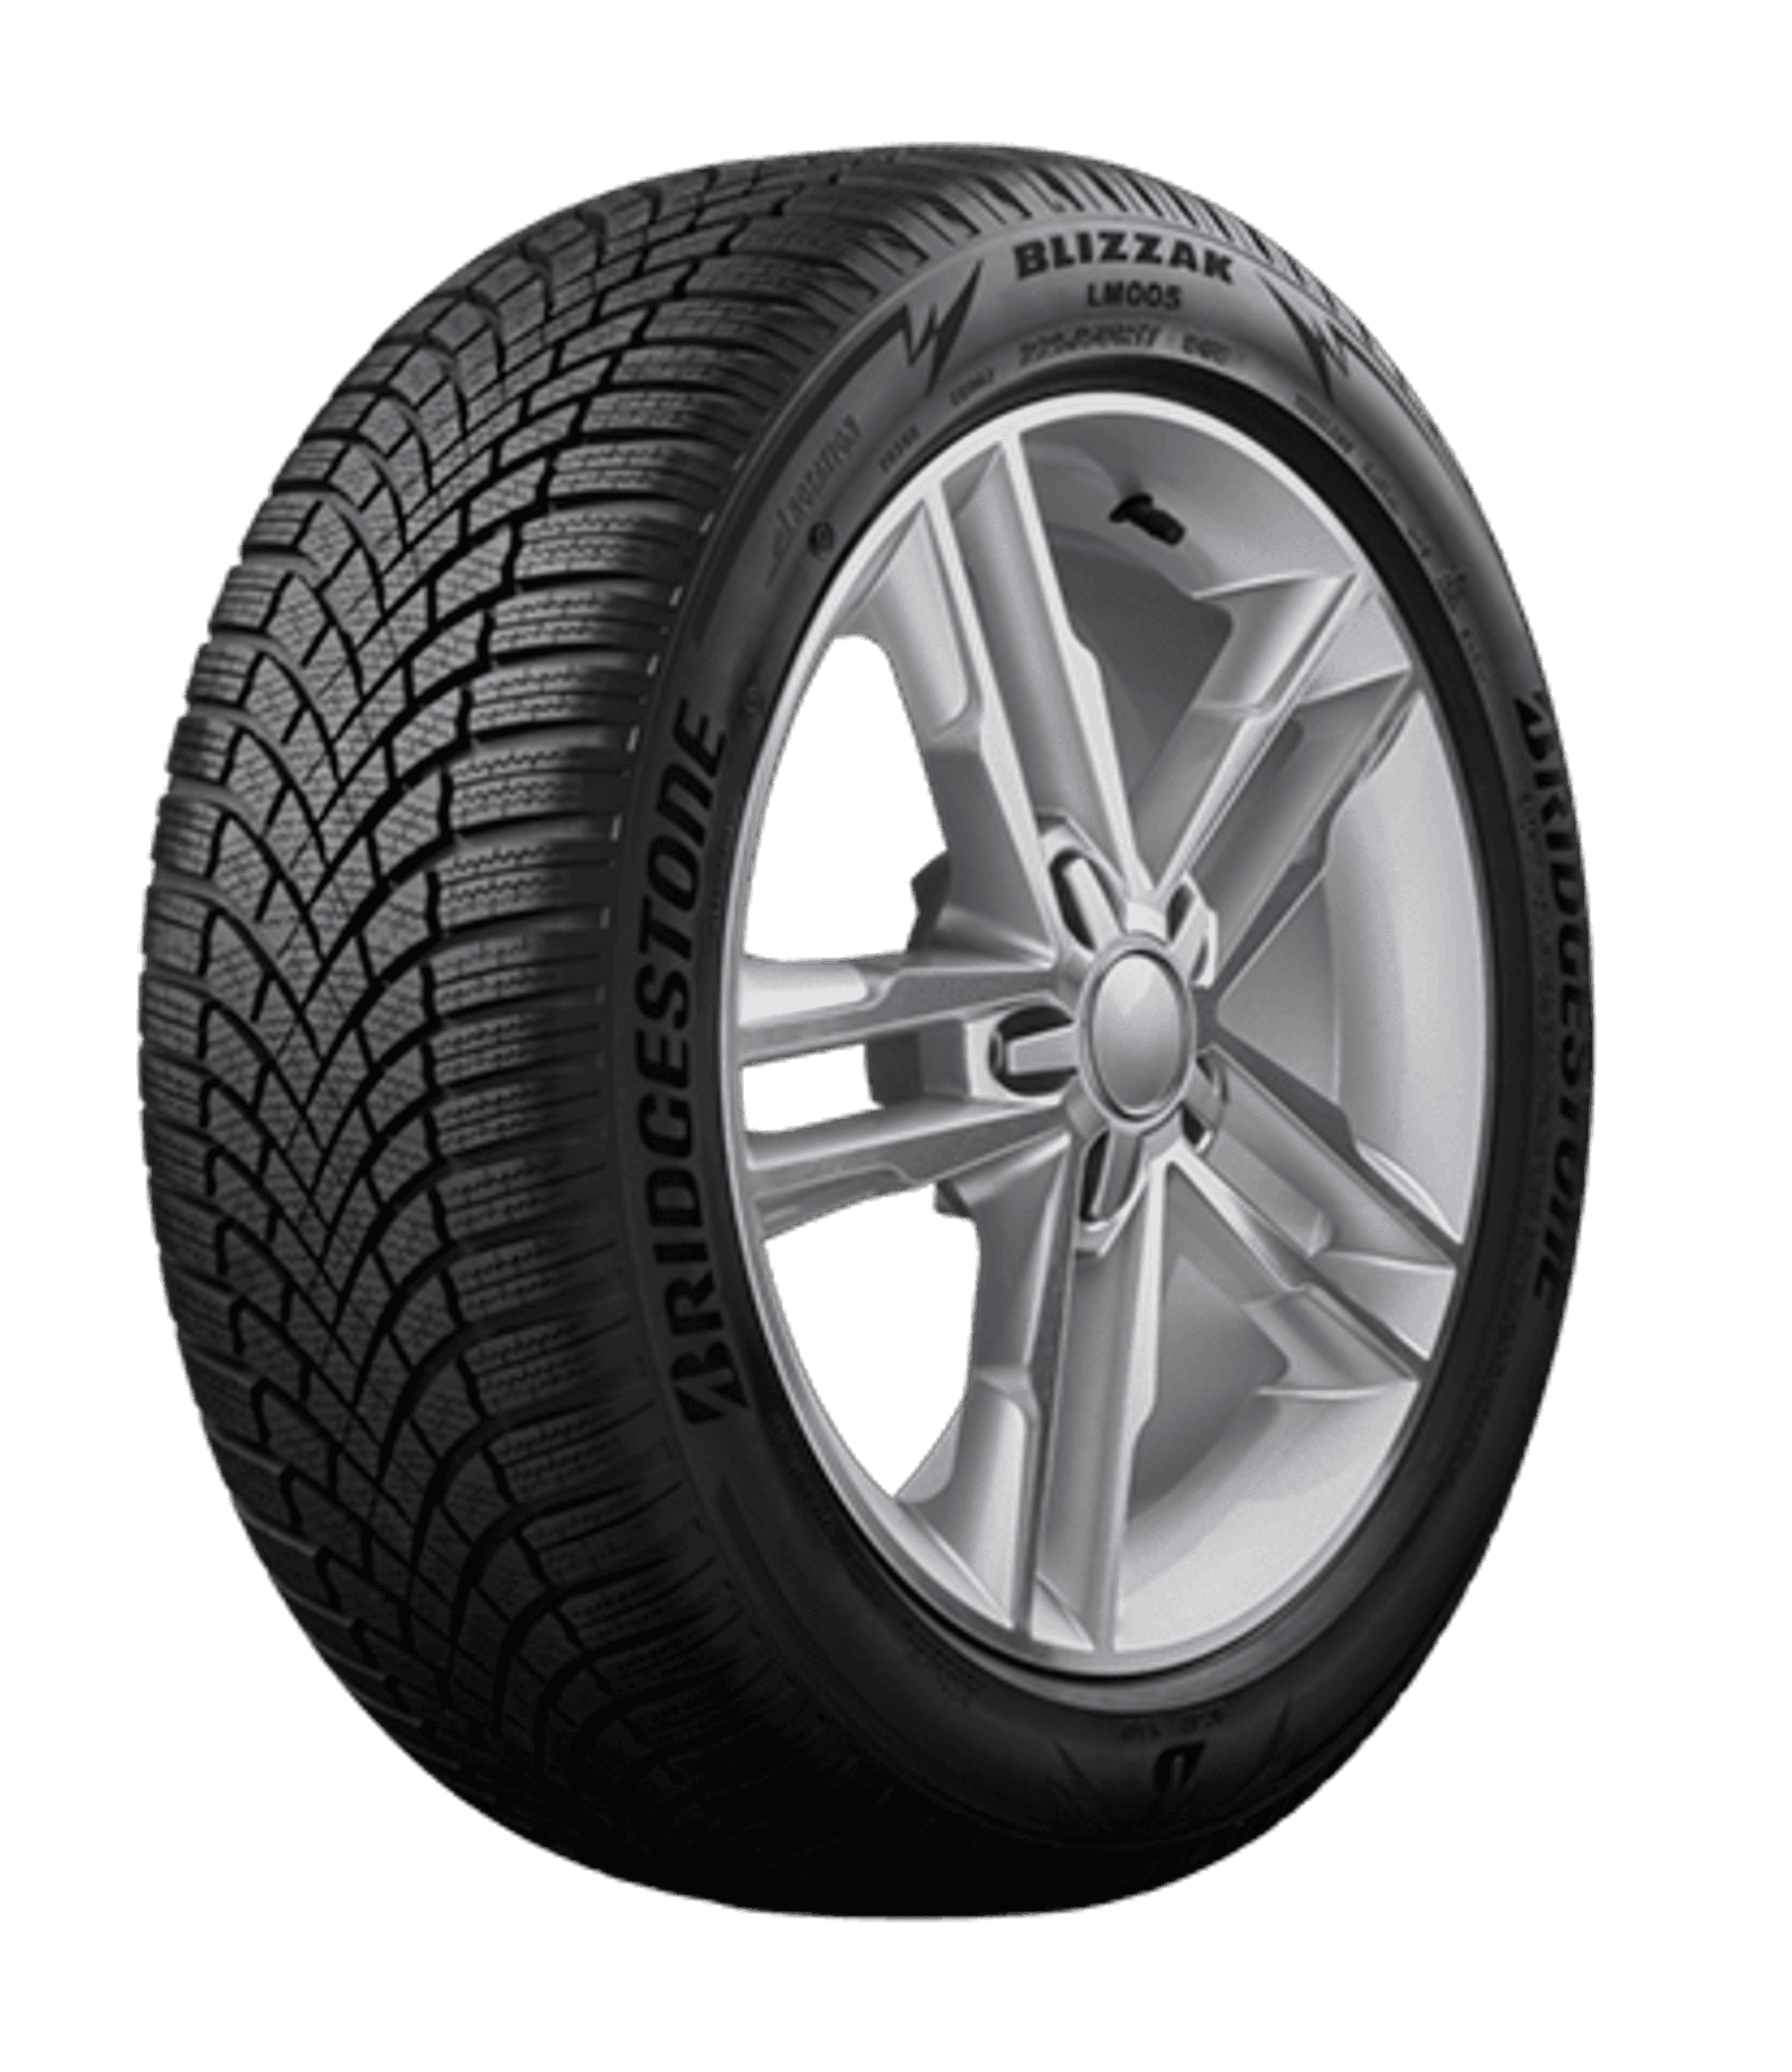 SimpleTire Blizzak Tires Buy Bridgestone Online | LM005